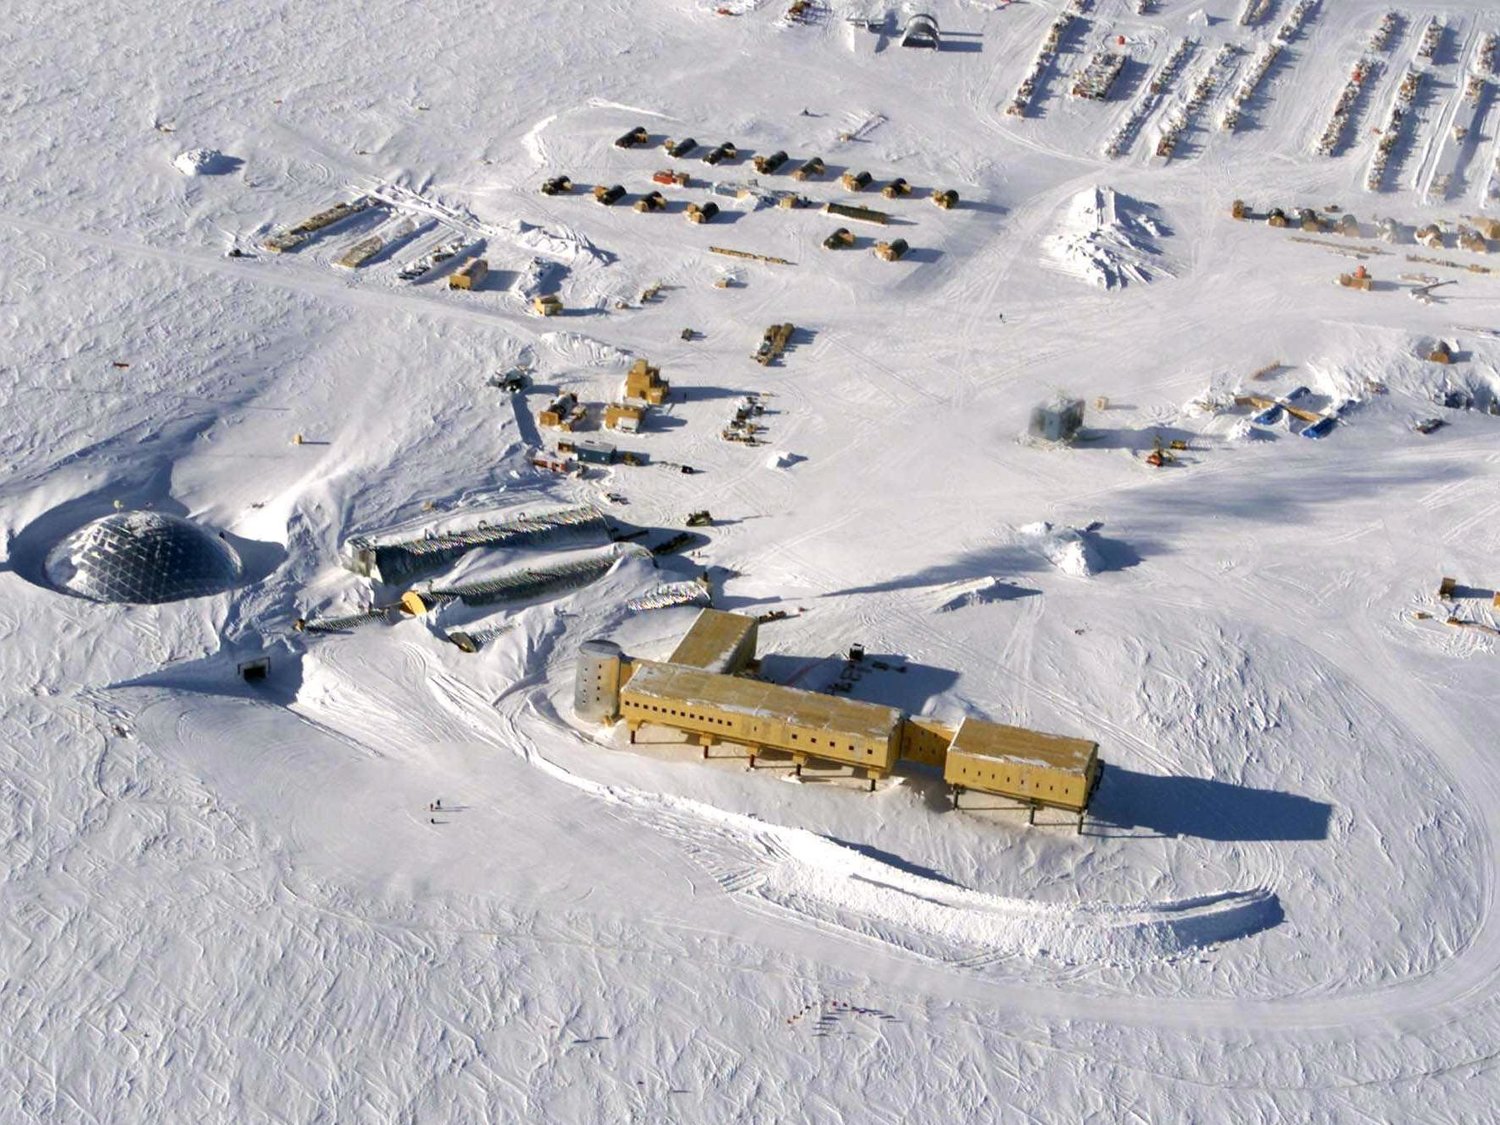 The U.S. Amundsen-Scott South Pole Station in Antarctica. PC: David McCarthy